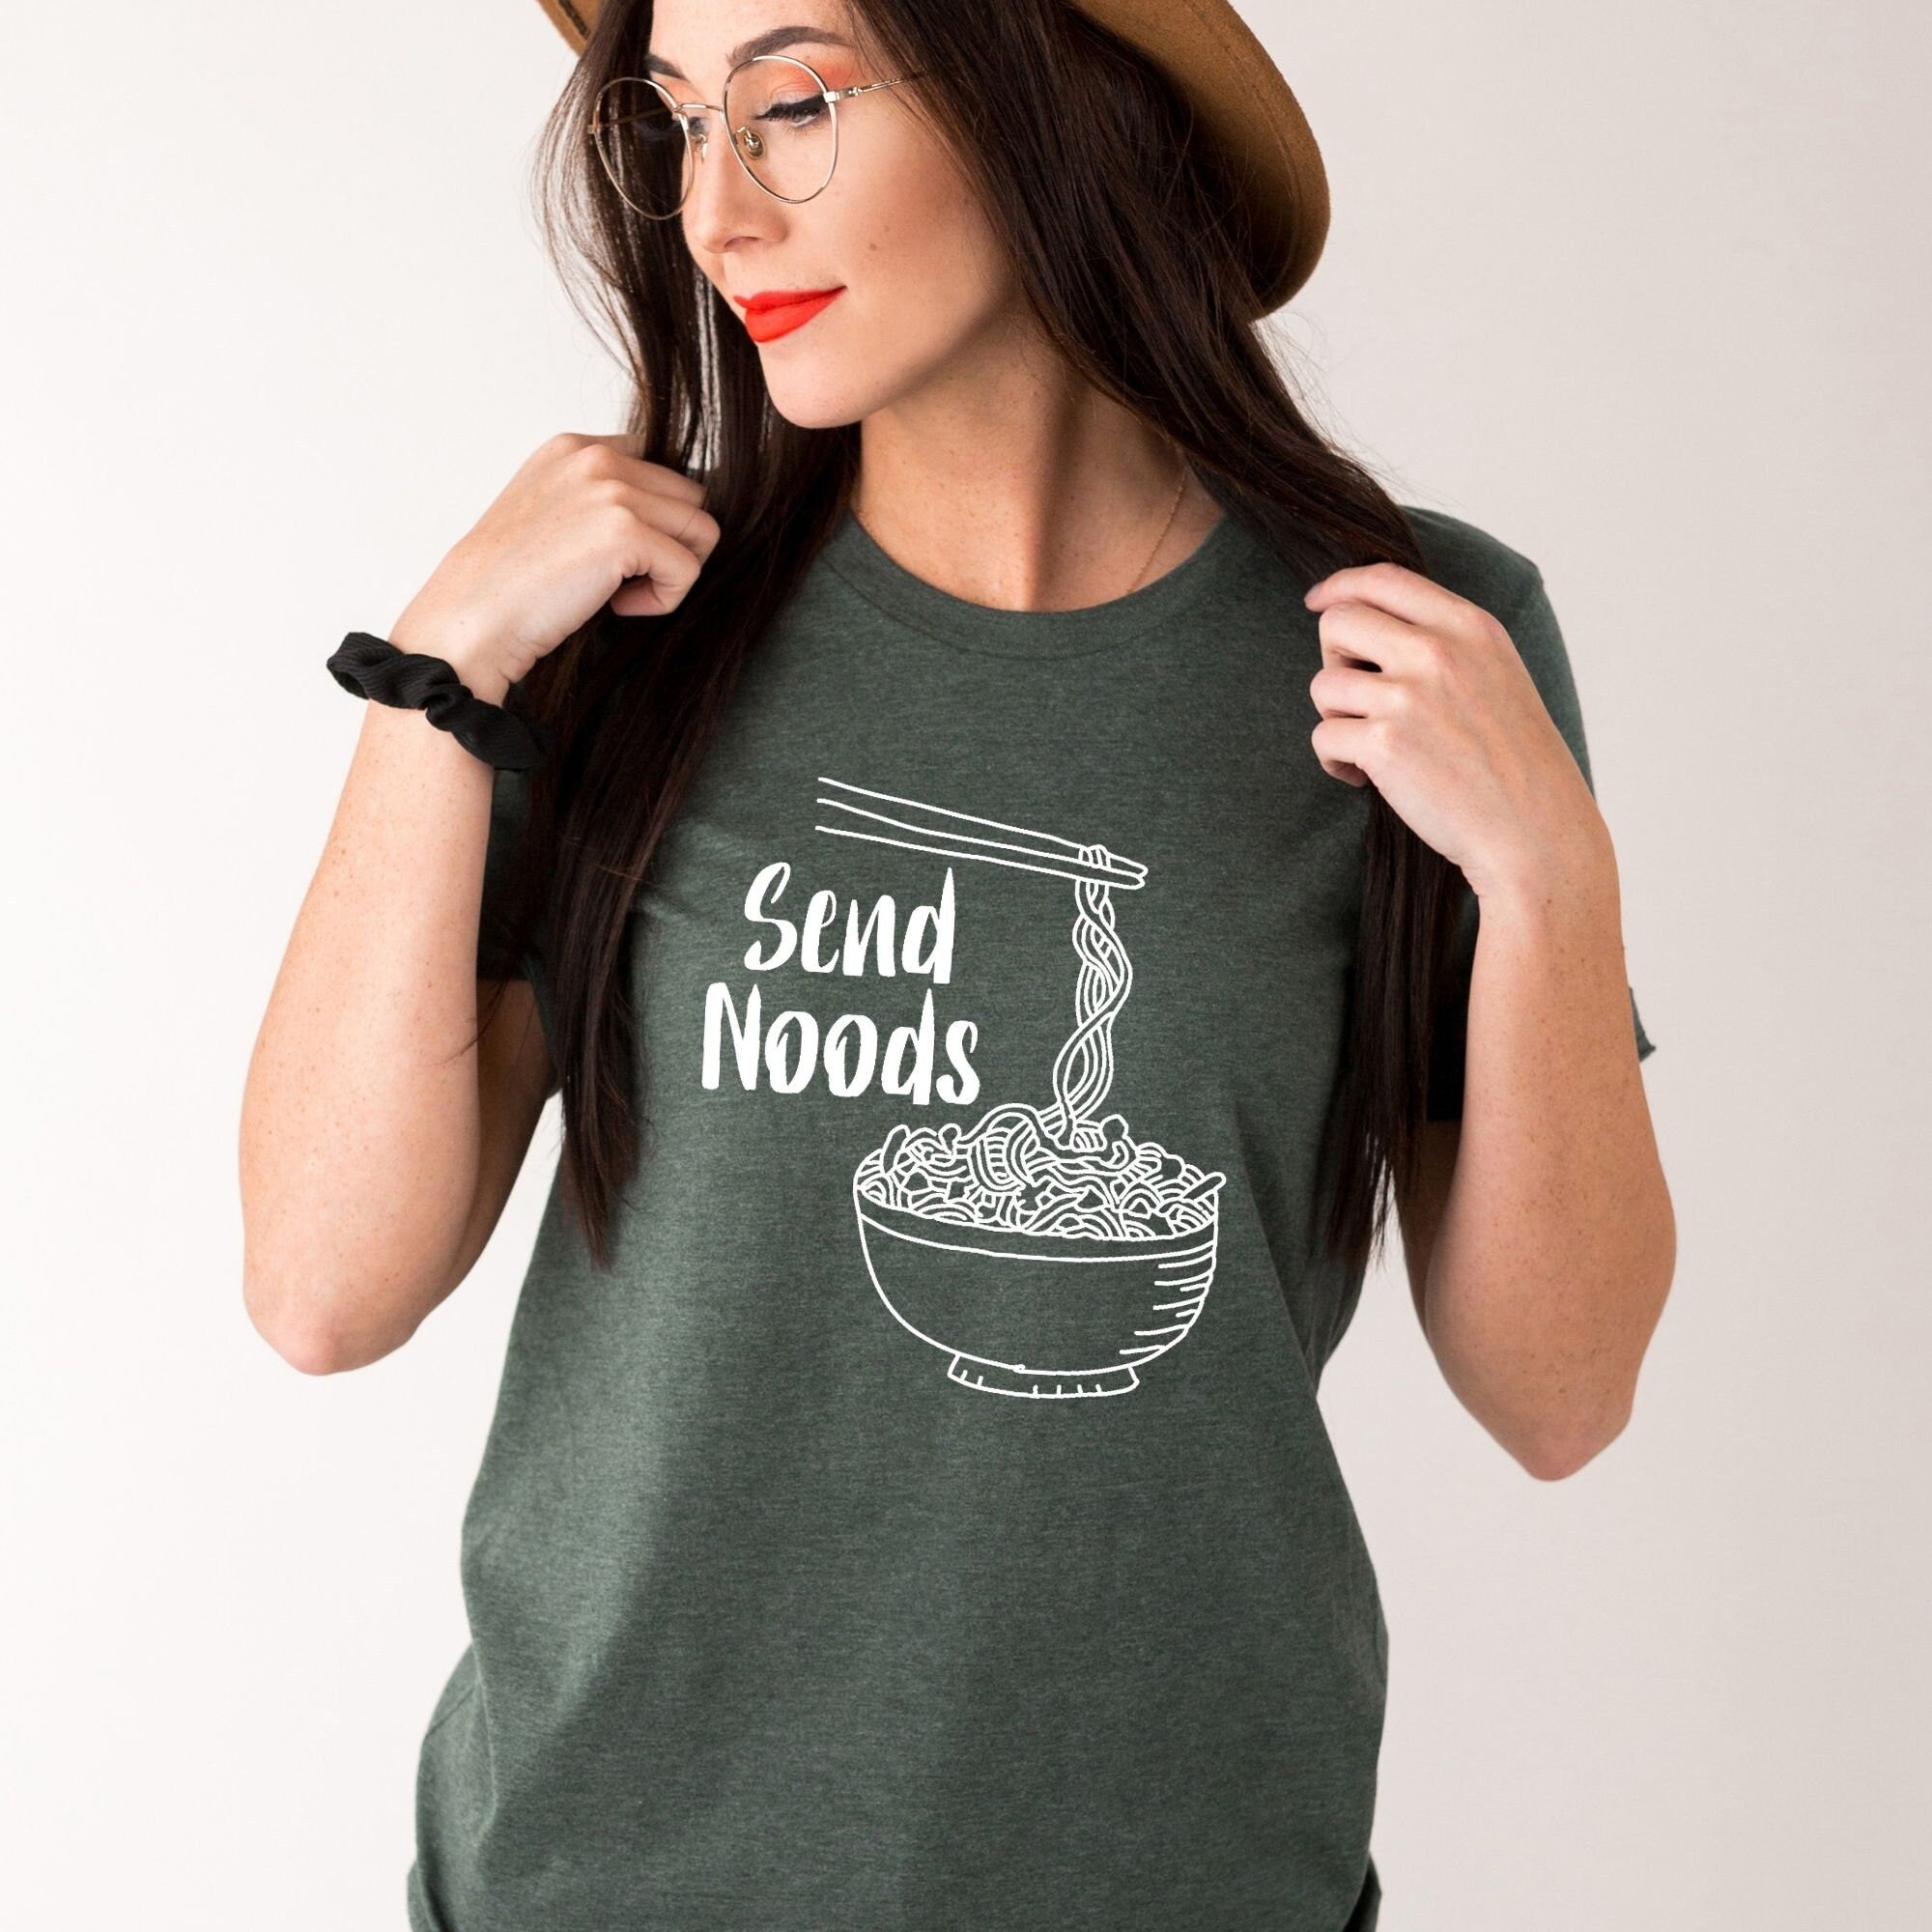 Send Noods, Foodie Shirt for Women *UNISEX FIT*-208 Tees Wholesale, Idaho